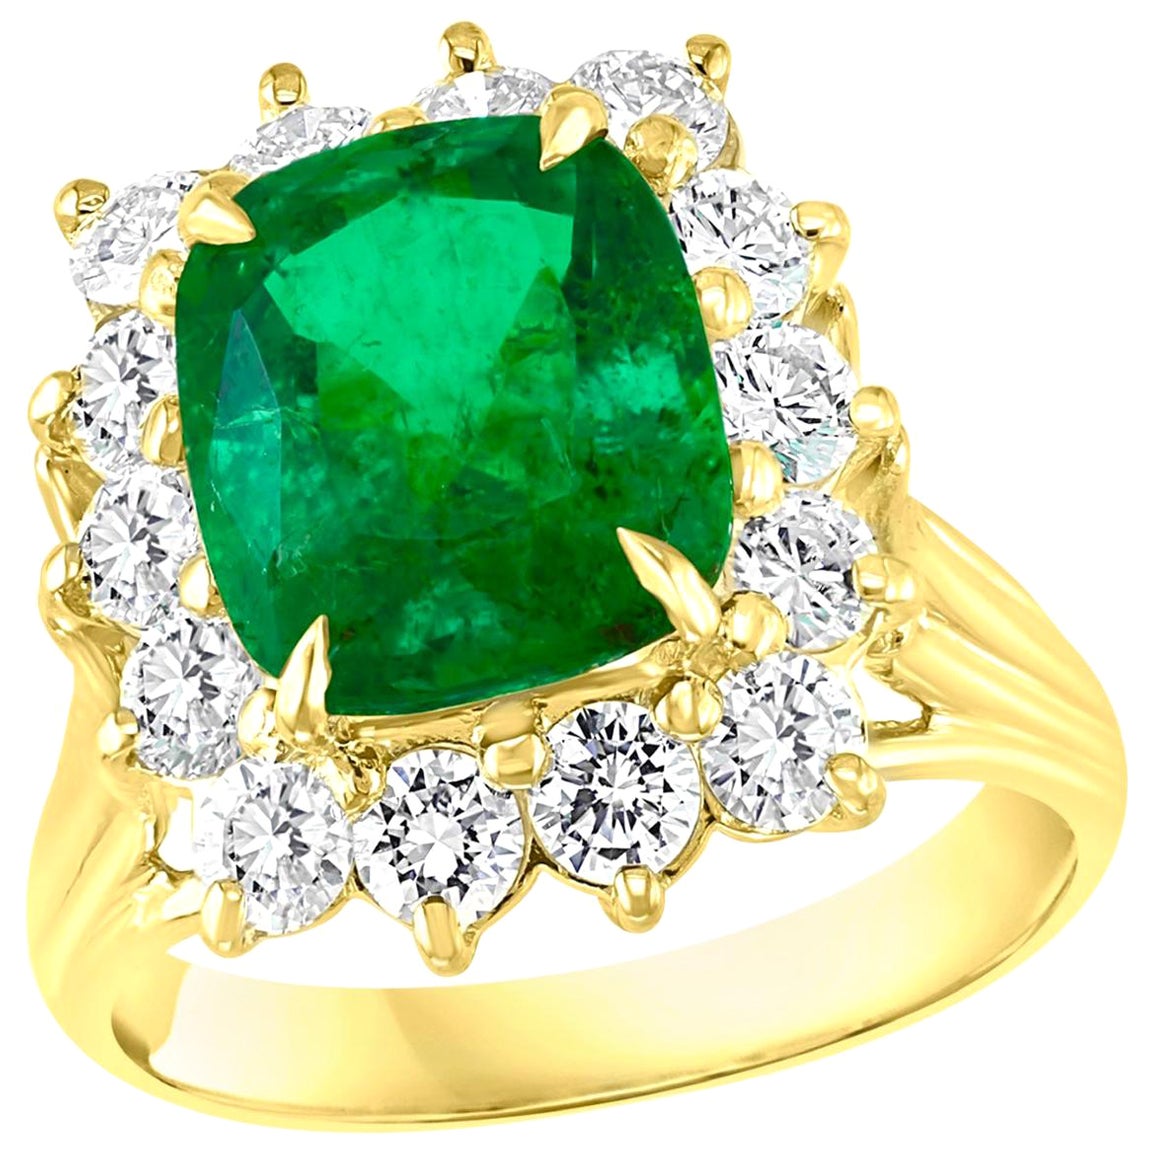 AGL Certified 4.2 Carat Cushion Cut Colombian Emerald & Diamond Ring 18K Y Gold